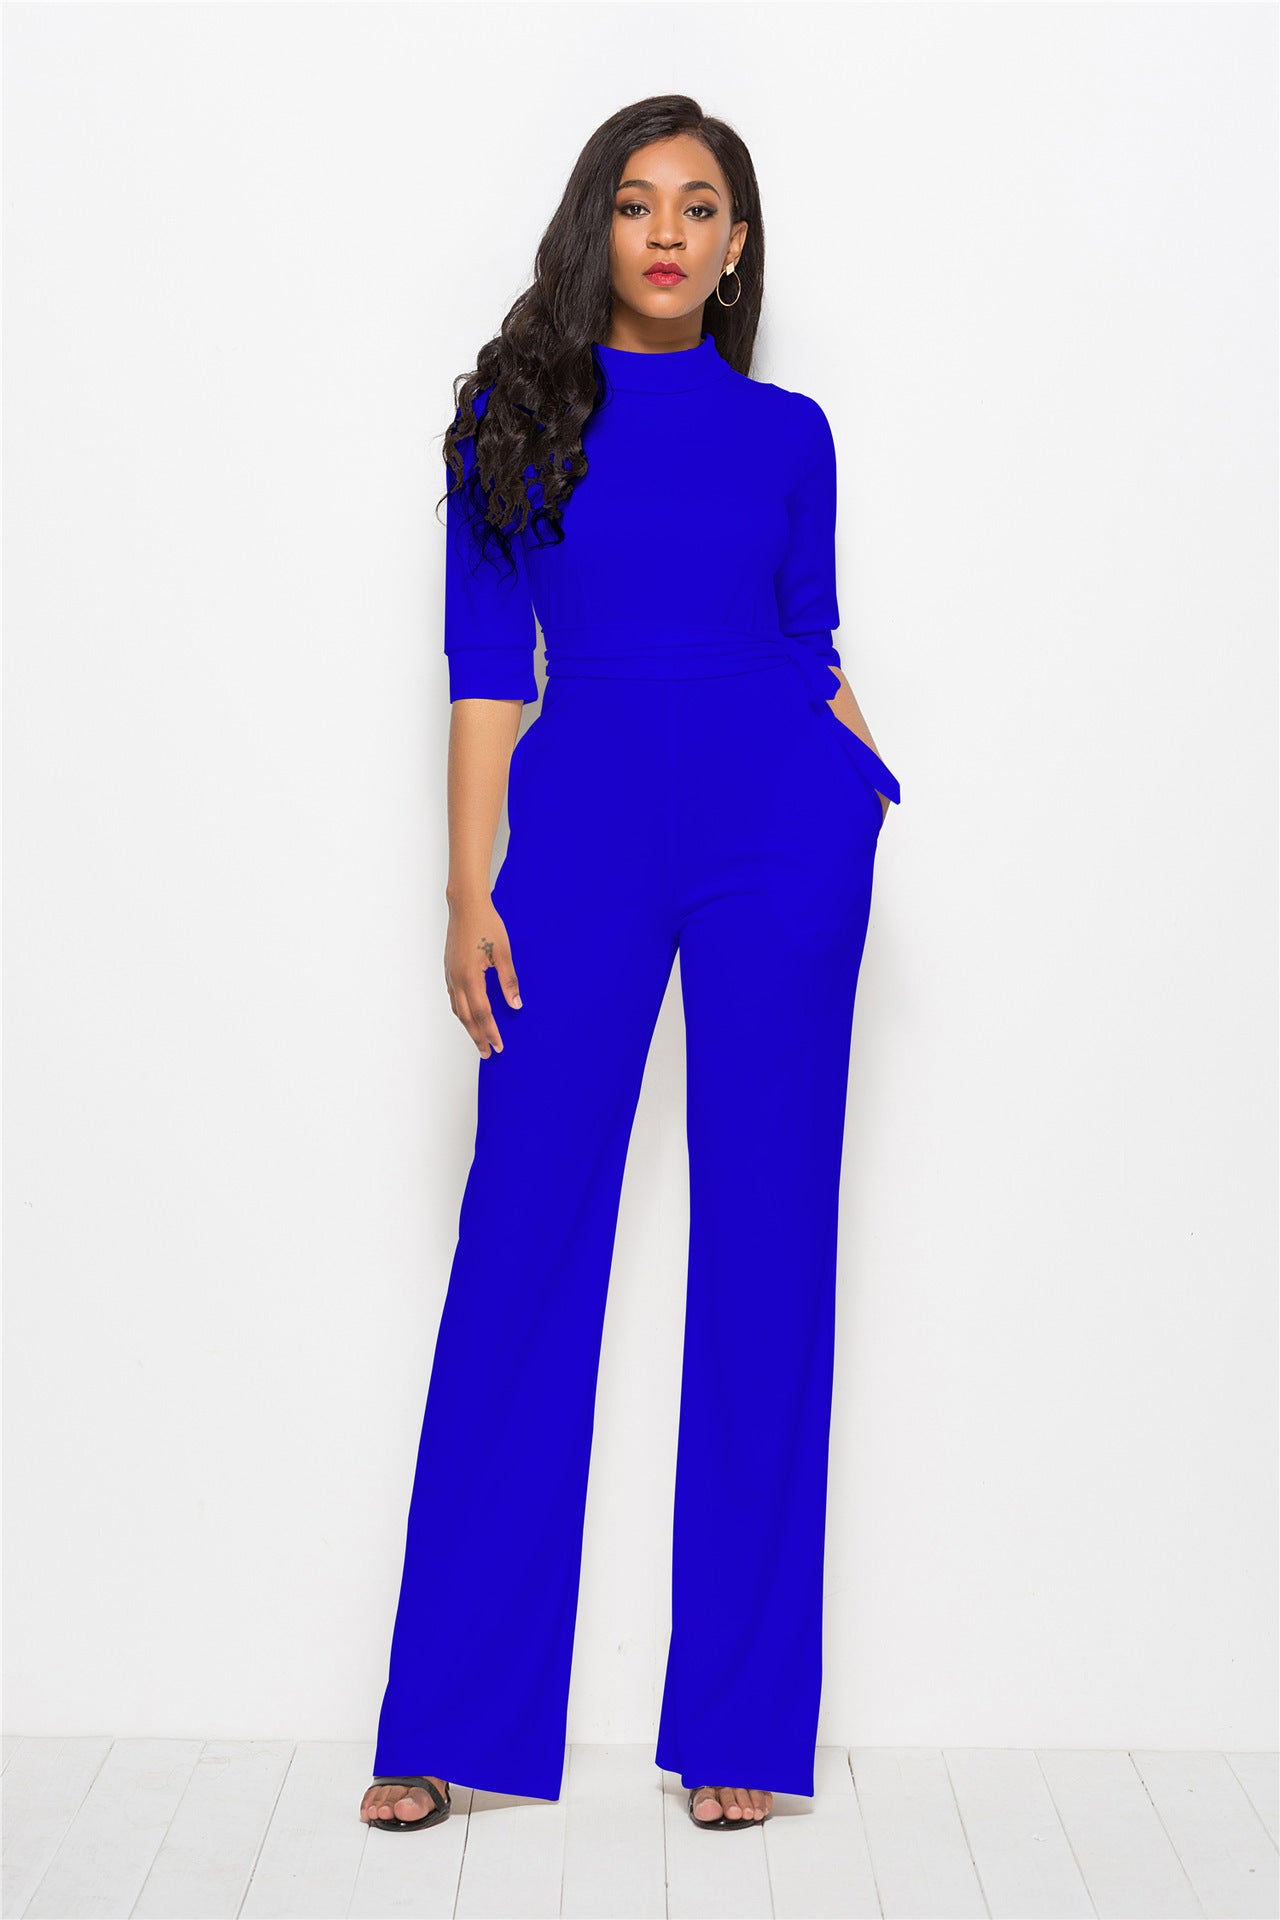 Sexy Fashion Women Fall Jumspuits-Women Suits-Dark Blue-S-Free Shipping at meselling99